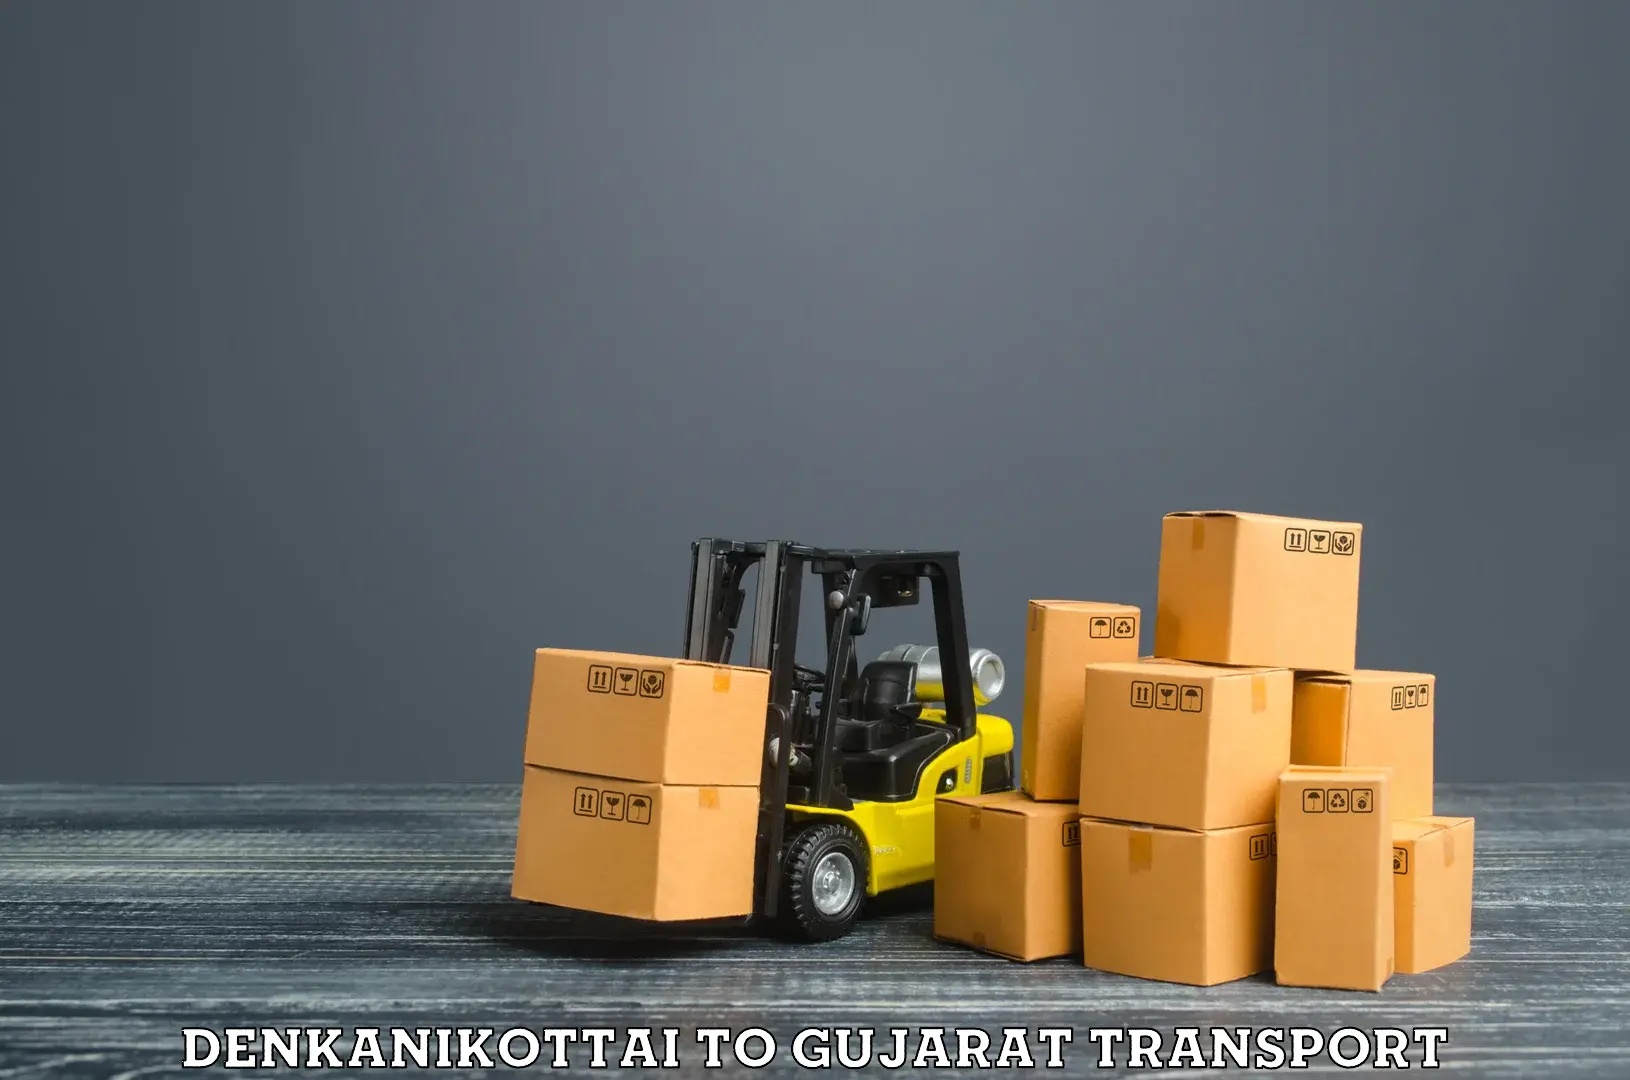 Delivery service Denkanikottai to Godhra